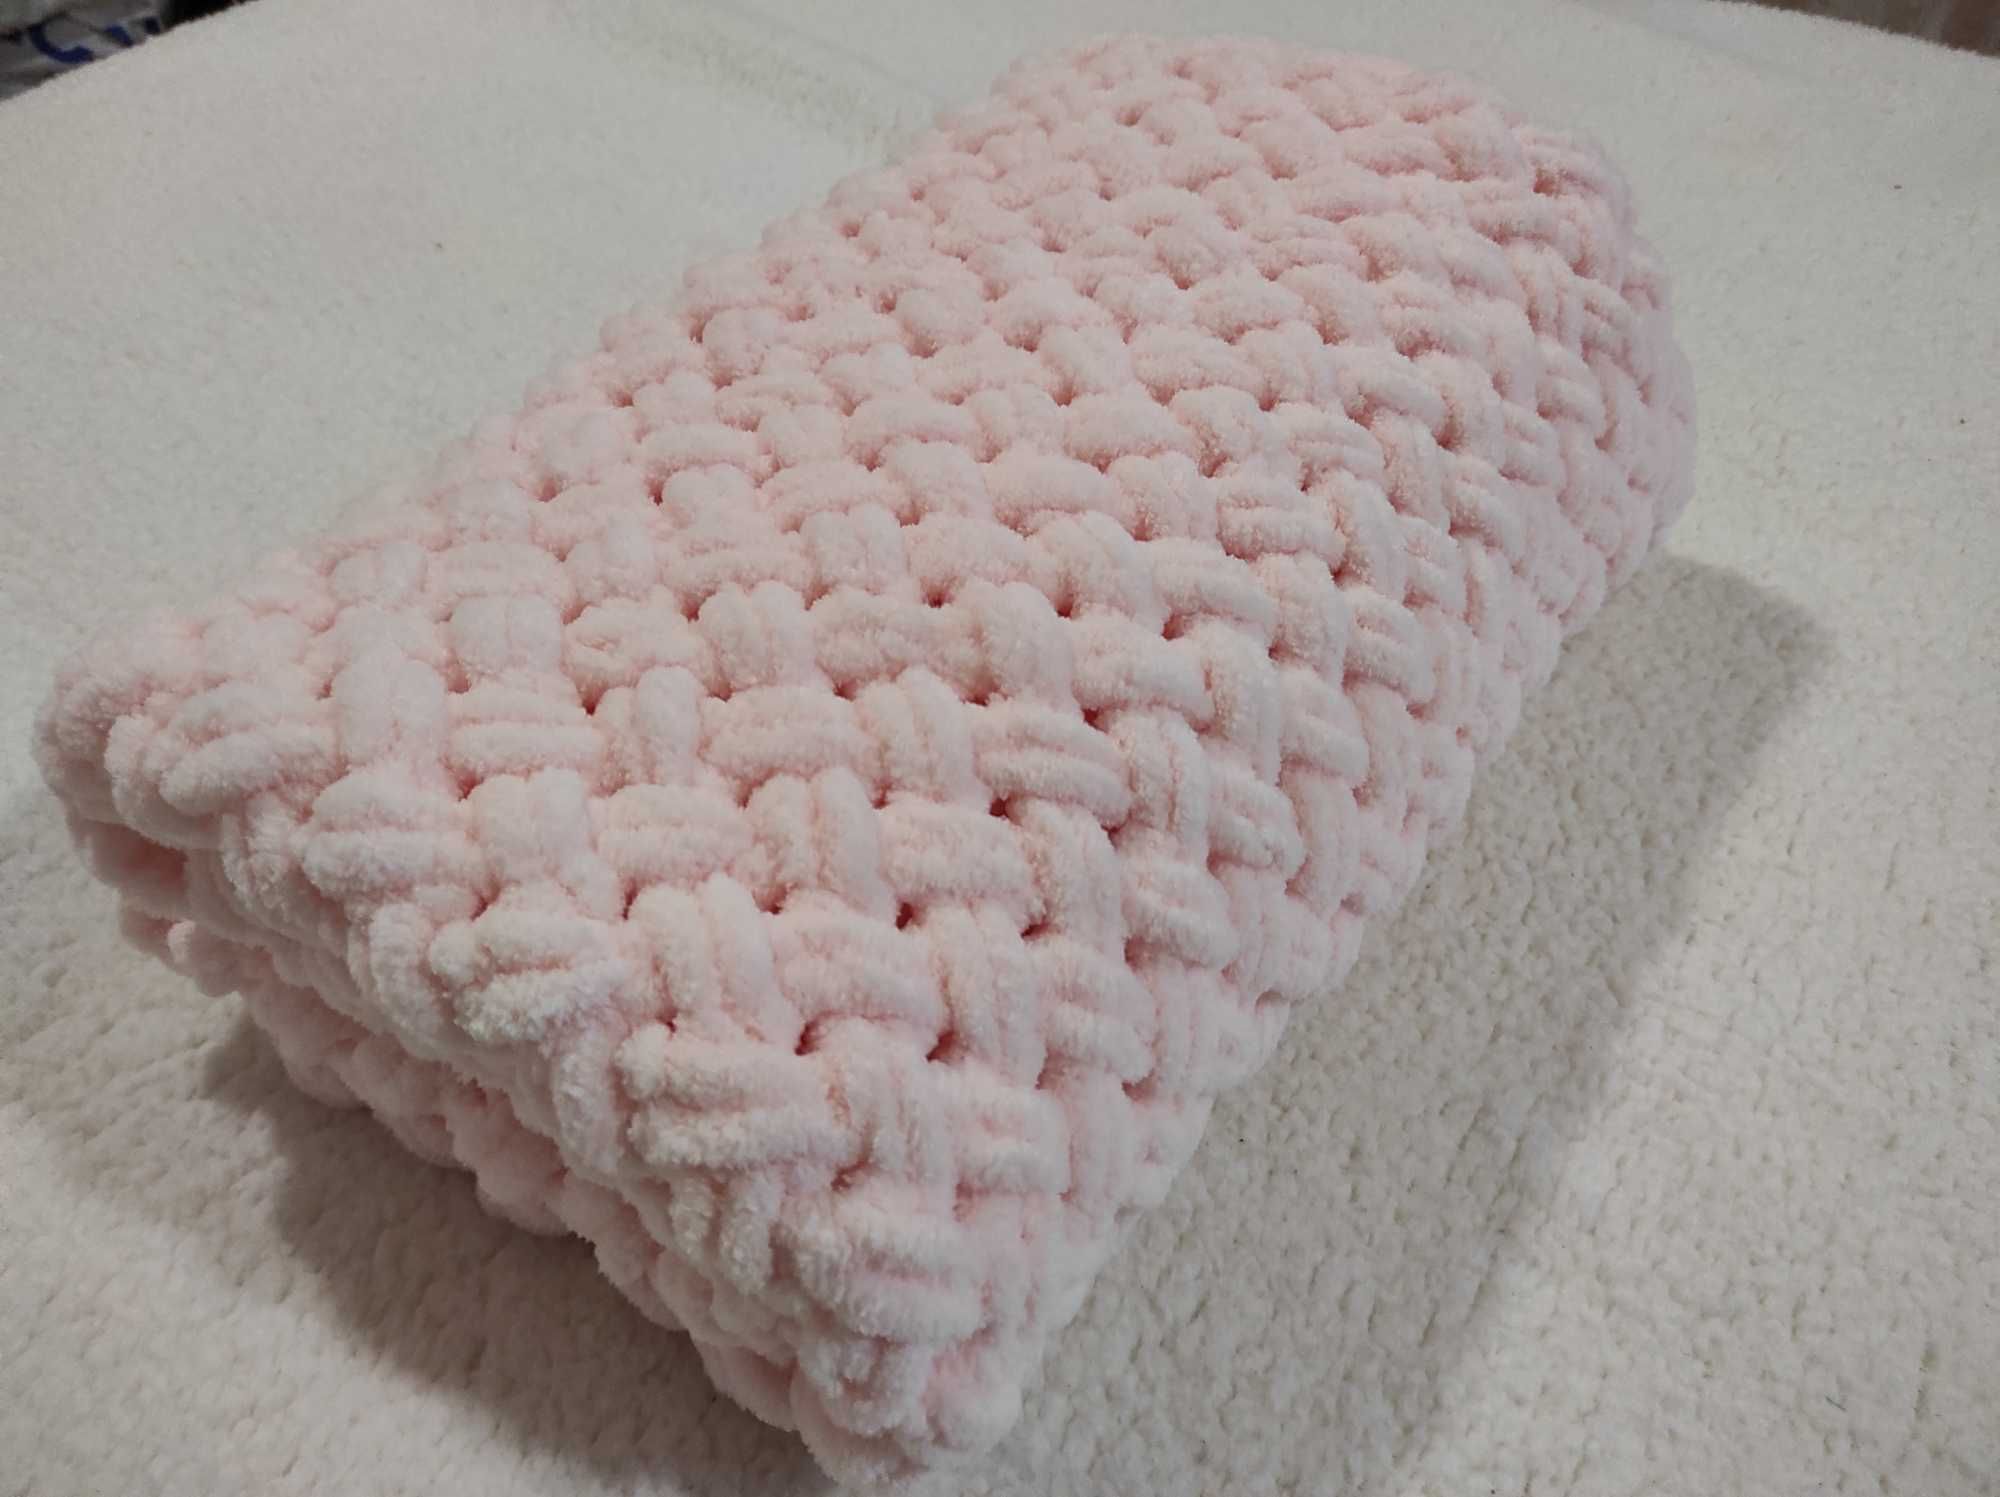 Бебешко одеяло-меко, пухкаво, ръчно плетено